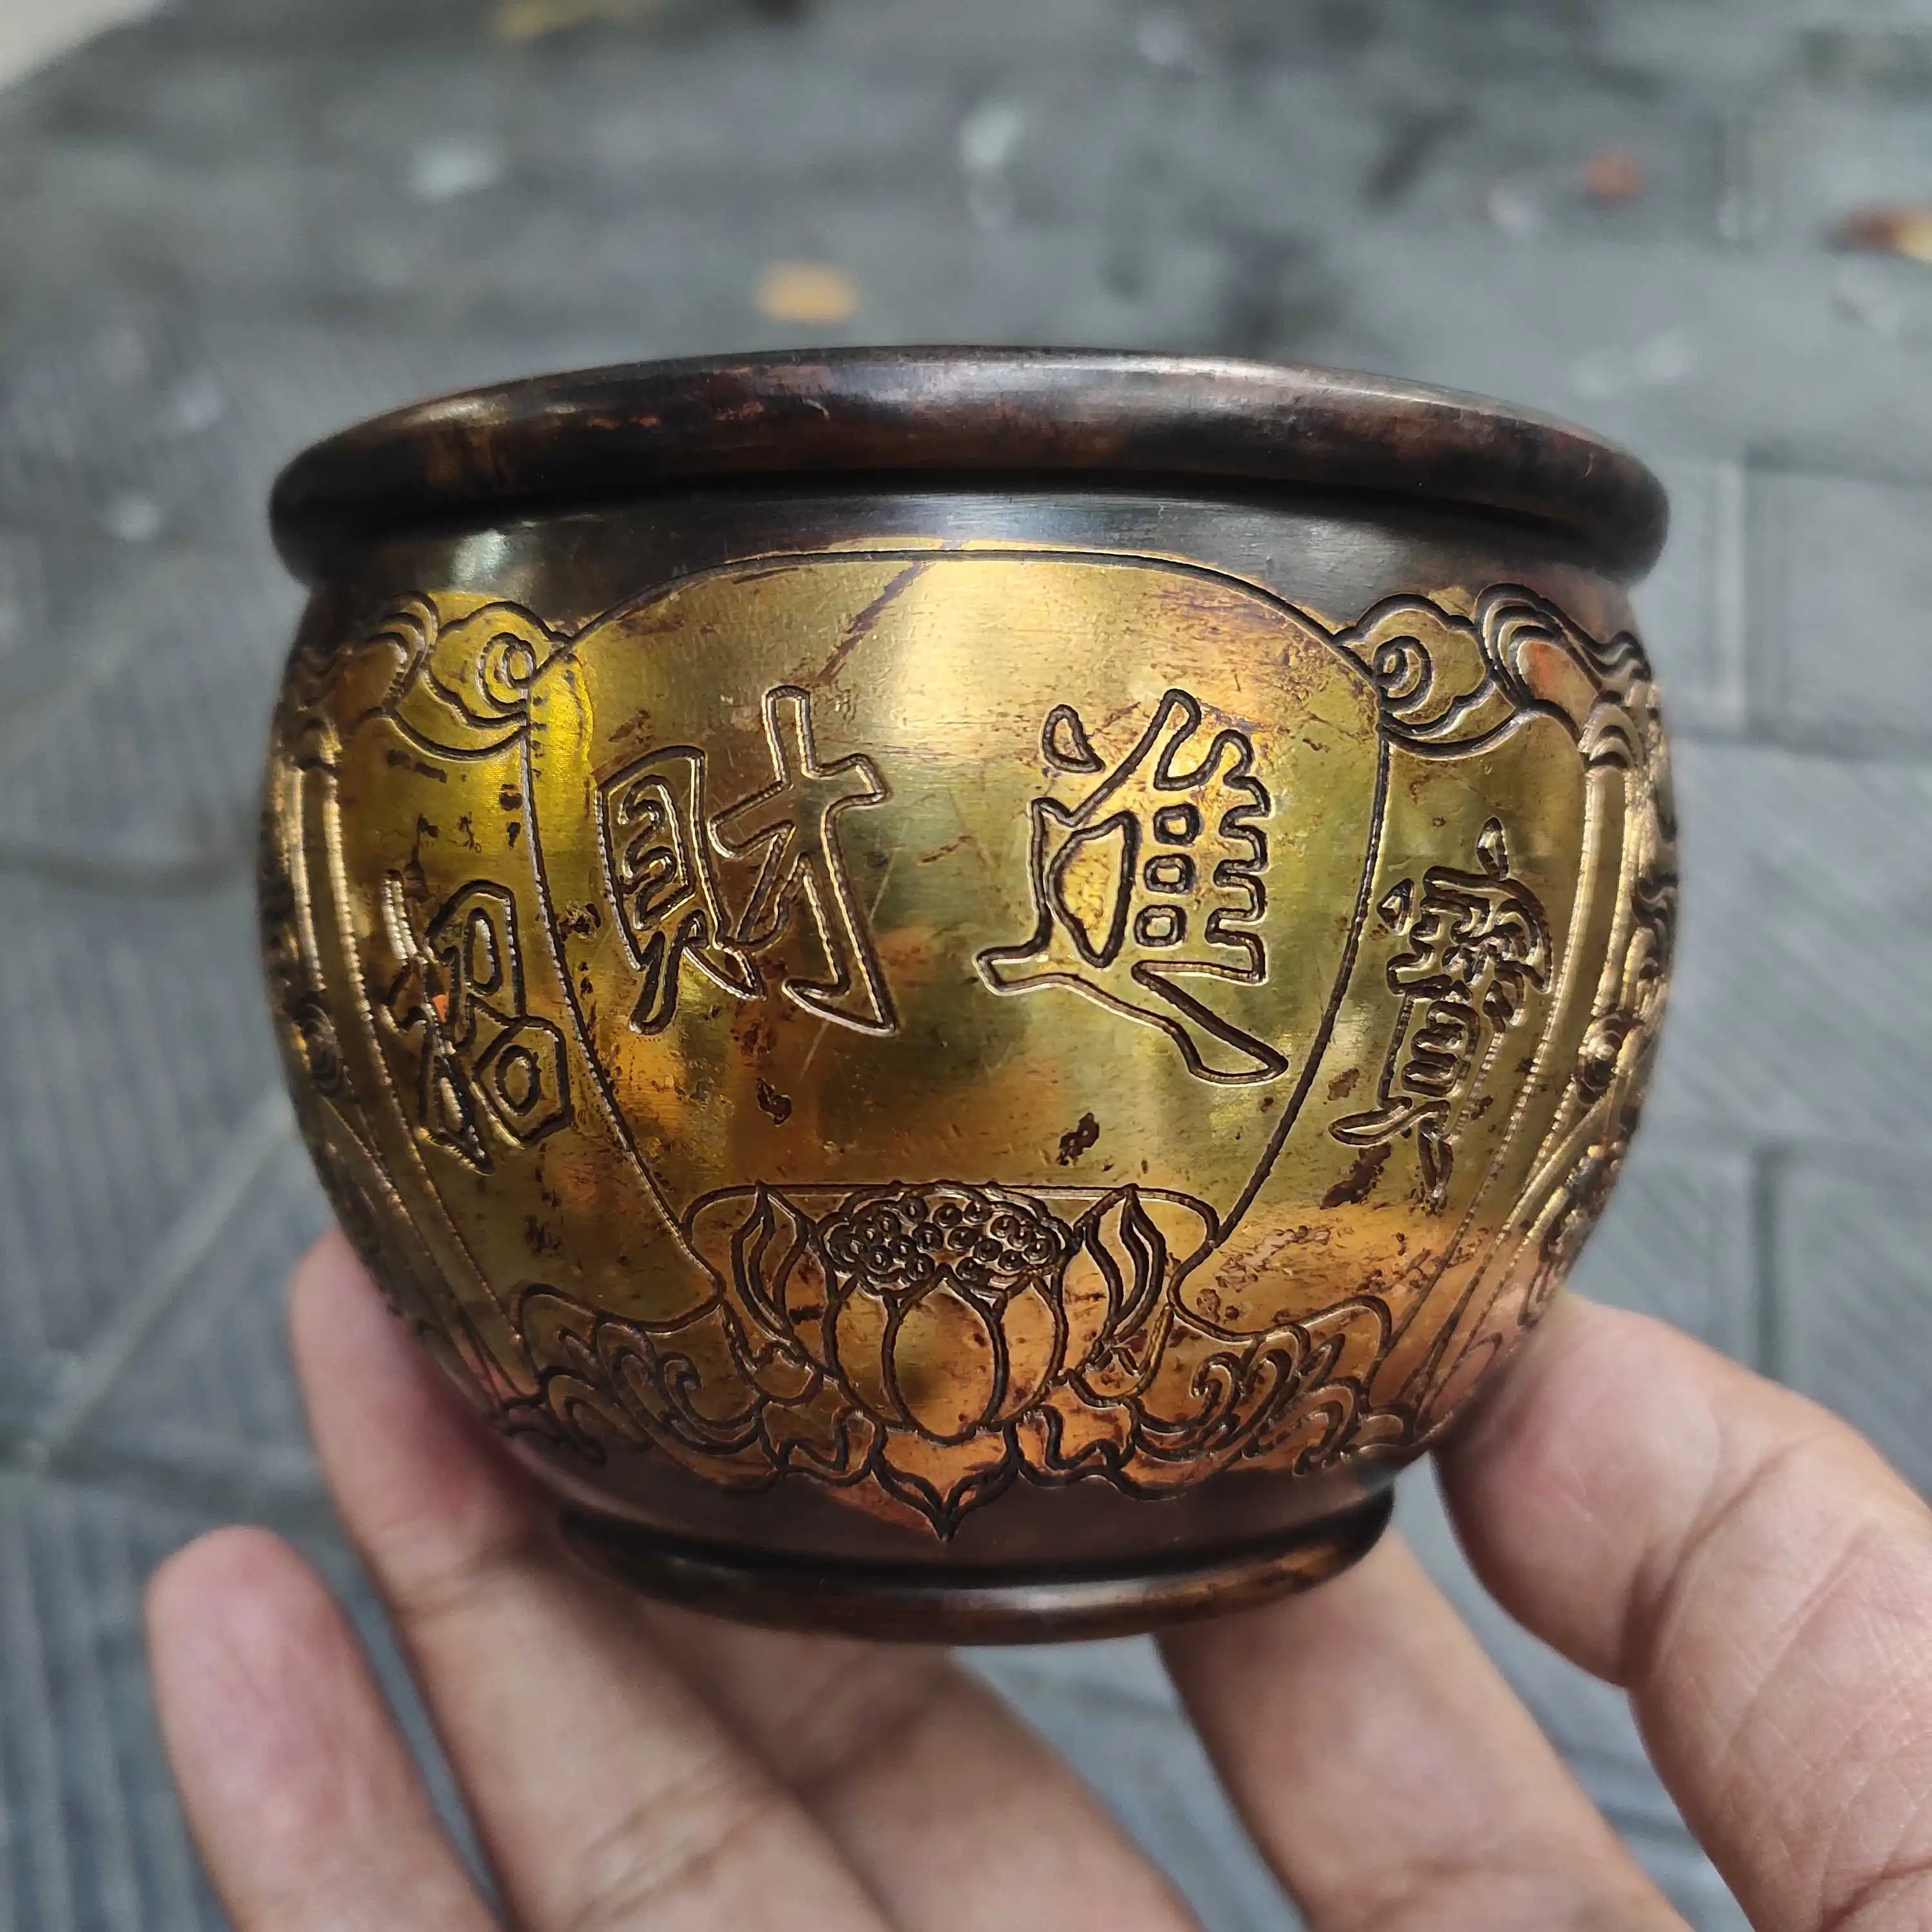 

Antique bronze collection pure copper gilding Palace jar incense burner ashtray lucky jar cornucopia